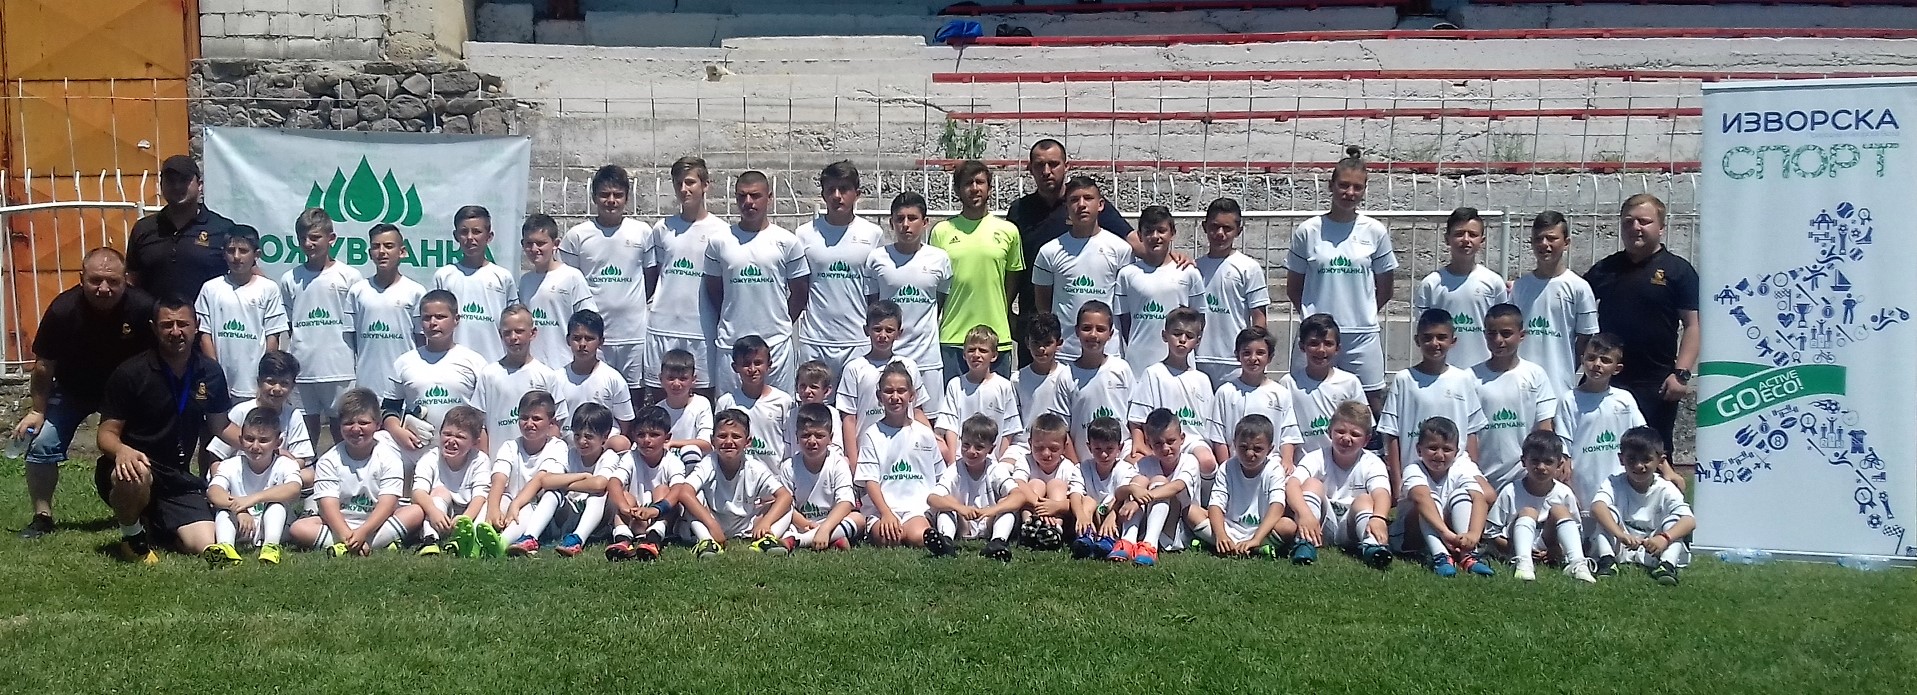 (Видео) Real Madrid Foundation Campus Experience Macedonia - додели 53 сертификати за успешно завршена фудбалска школа во Кавадарци